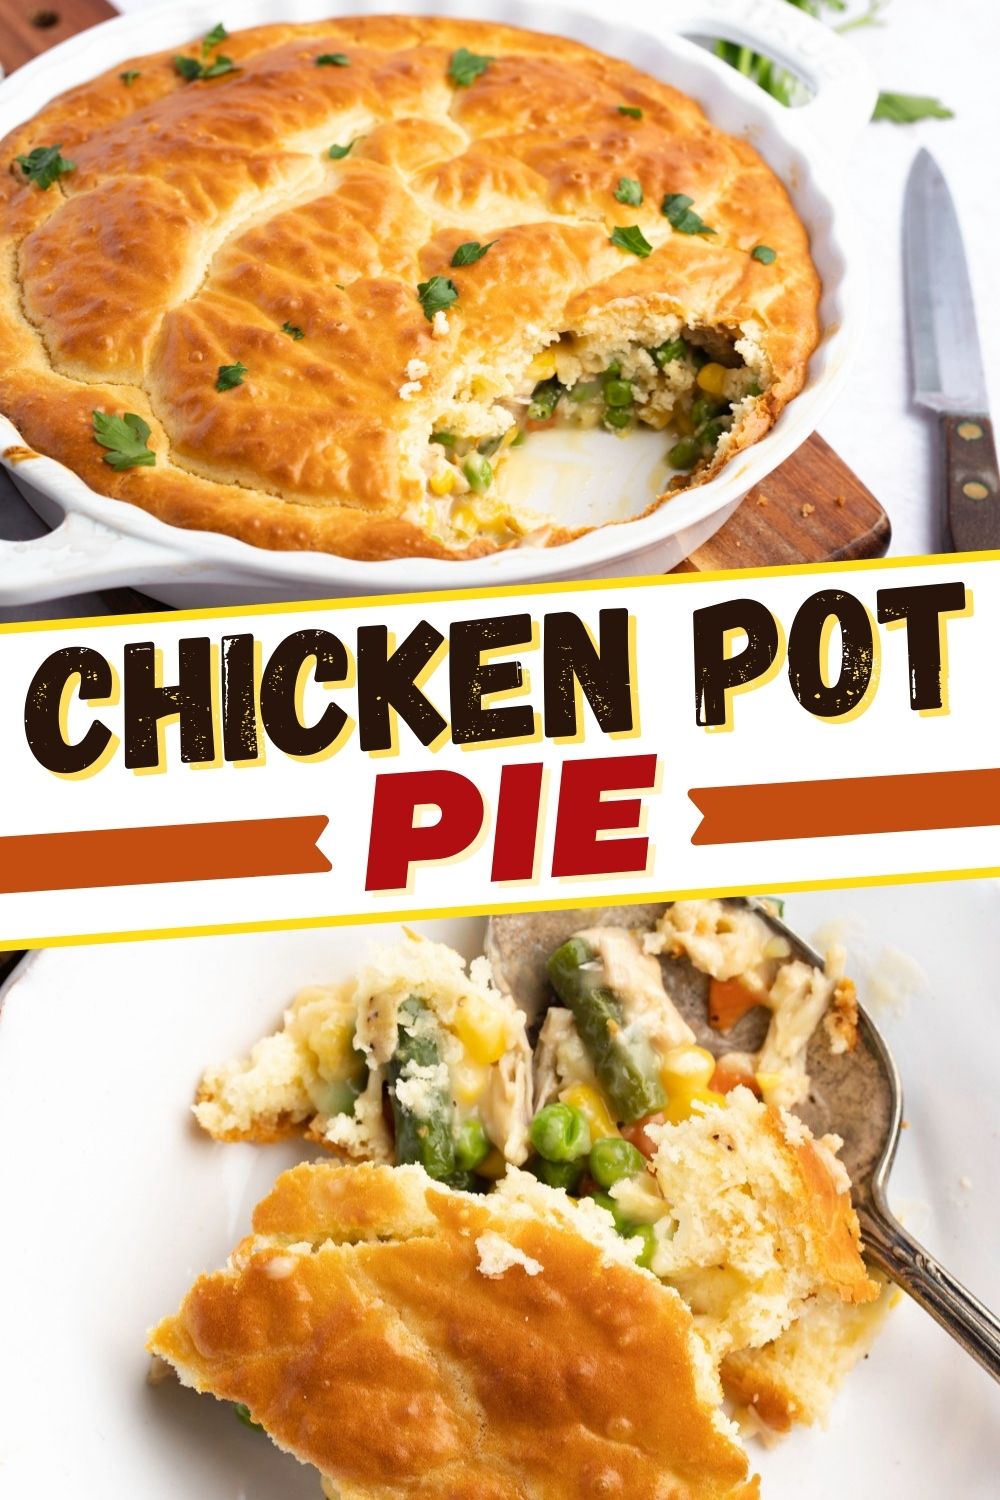 https://insanelygoodrecipes.com/wp-content/uploads/2022/01/Chicken-Pot-Pie-1.jpg